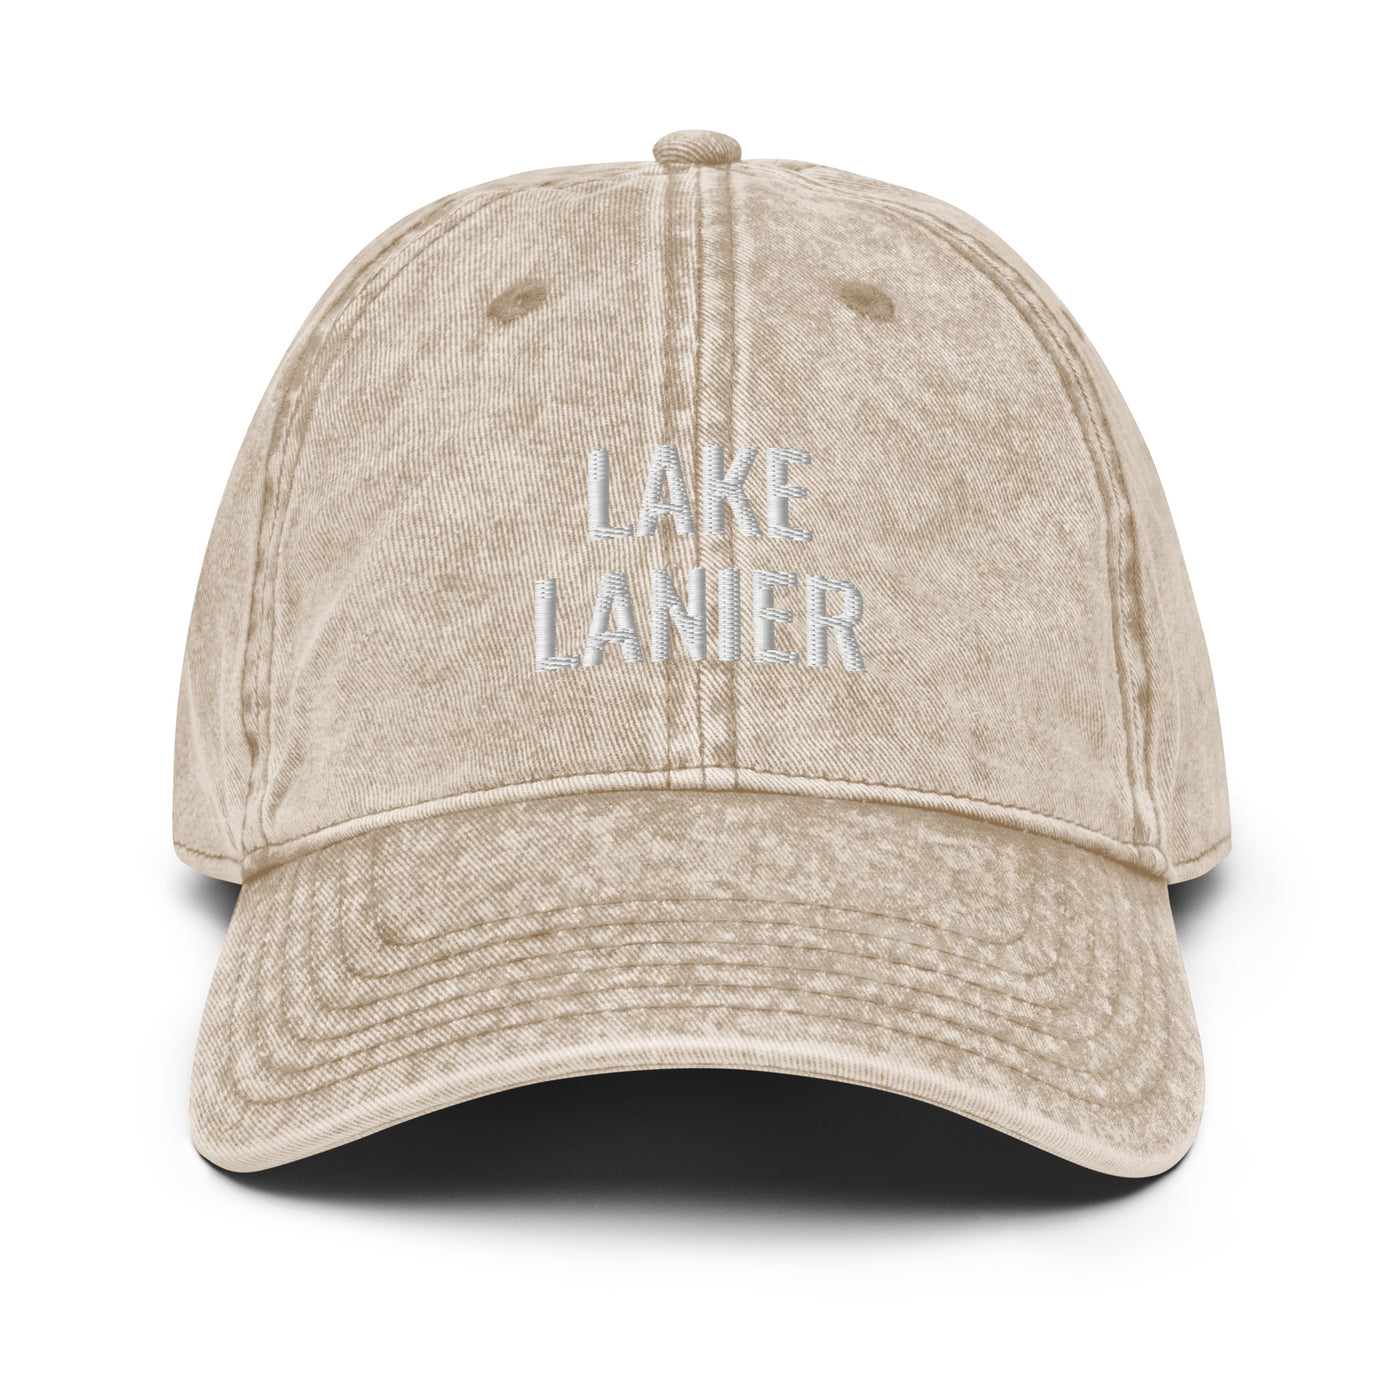 Lake Lanier Hat Hats Ezra's Clothing Khaki  